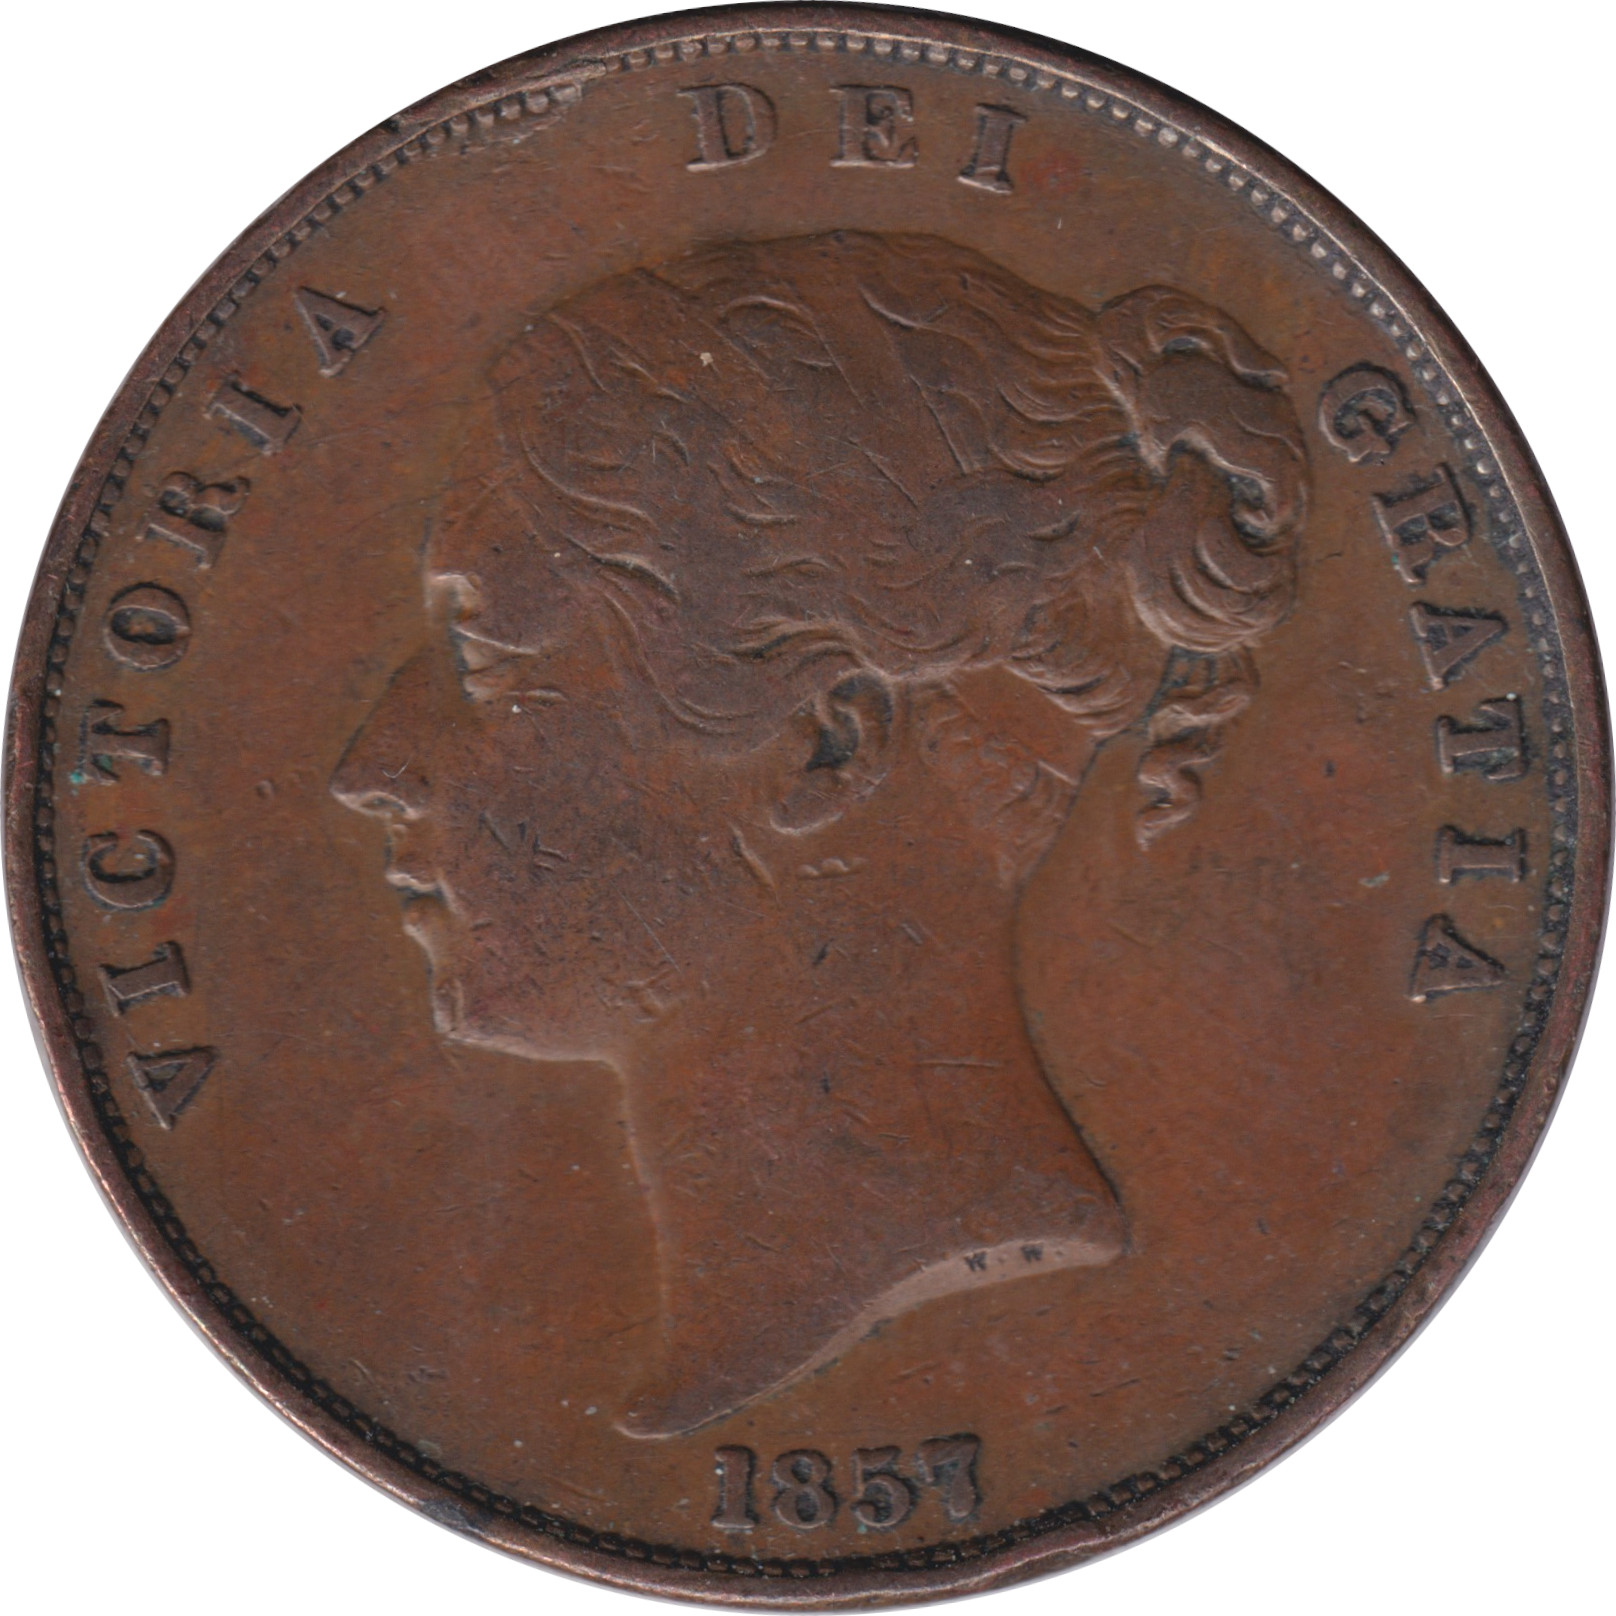 1 penny - Victoria - Tête jeune